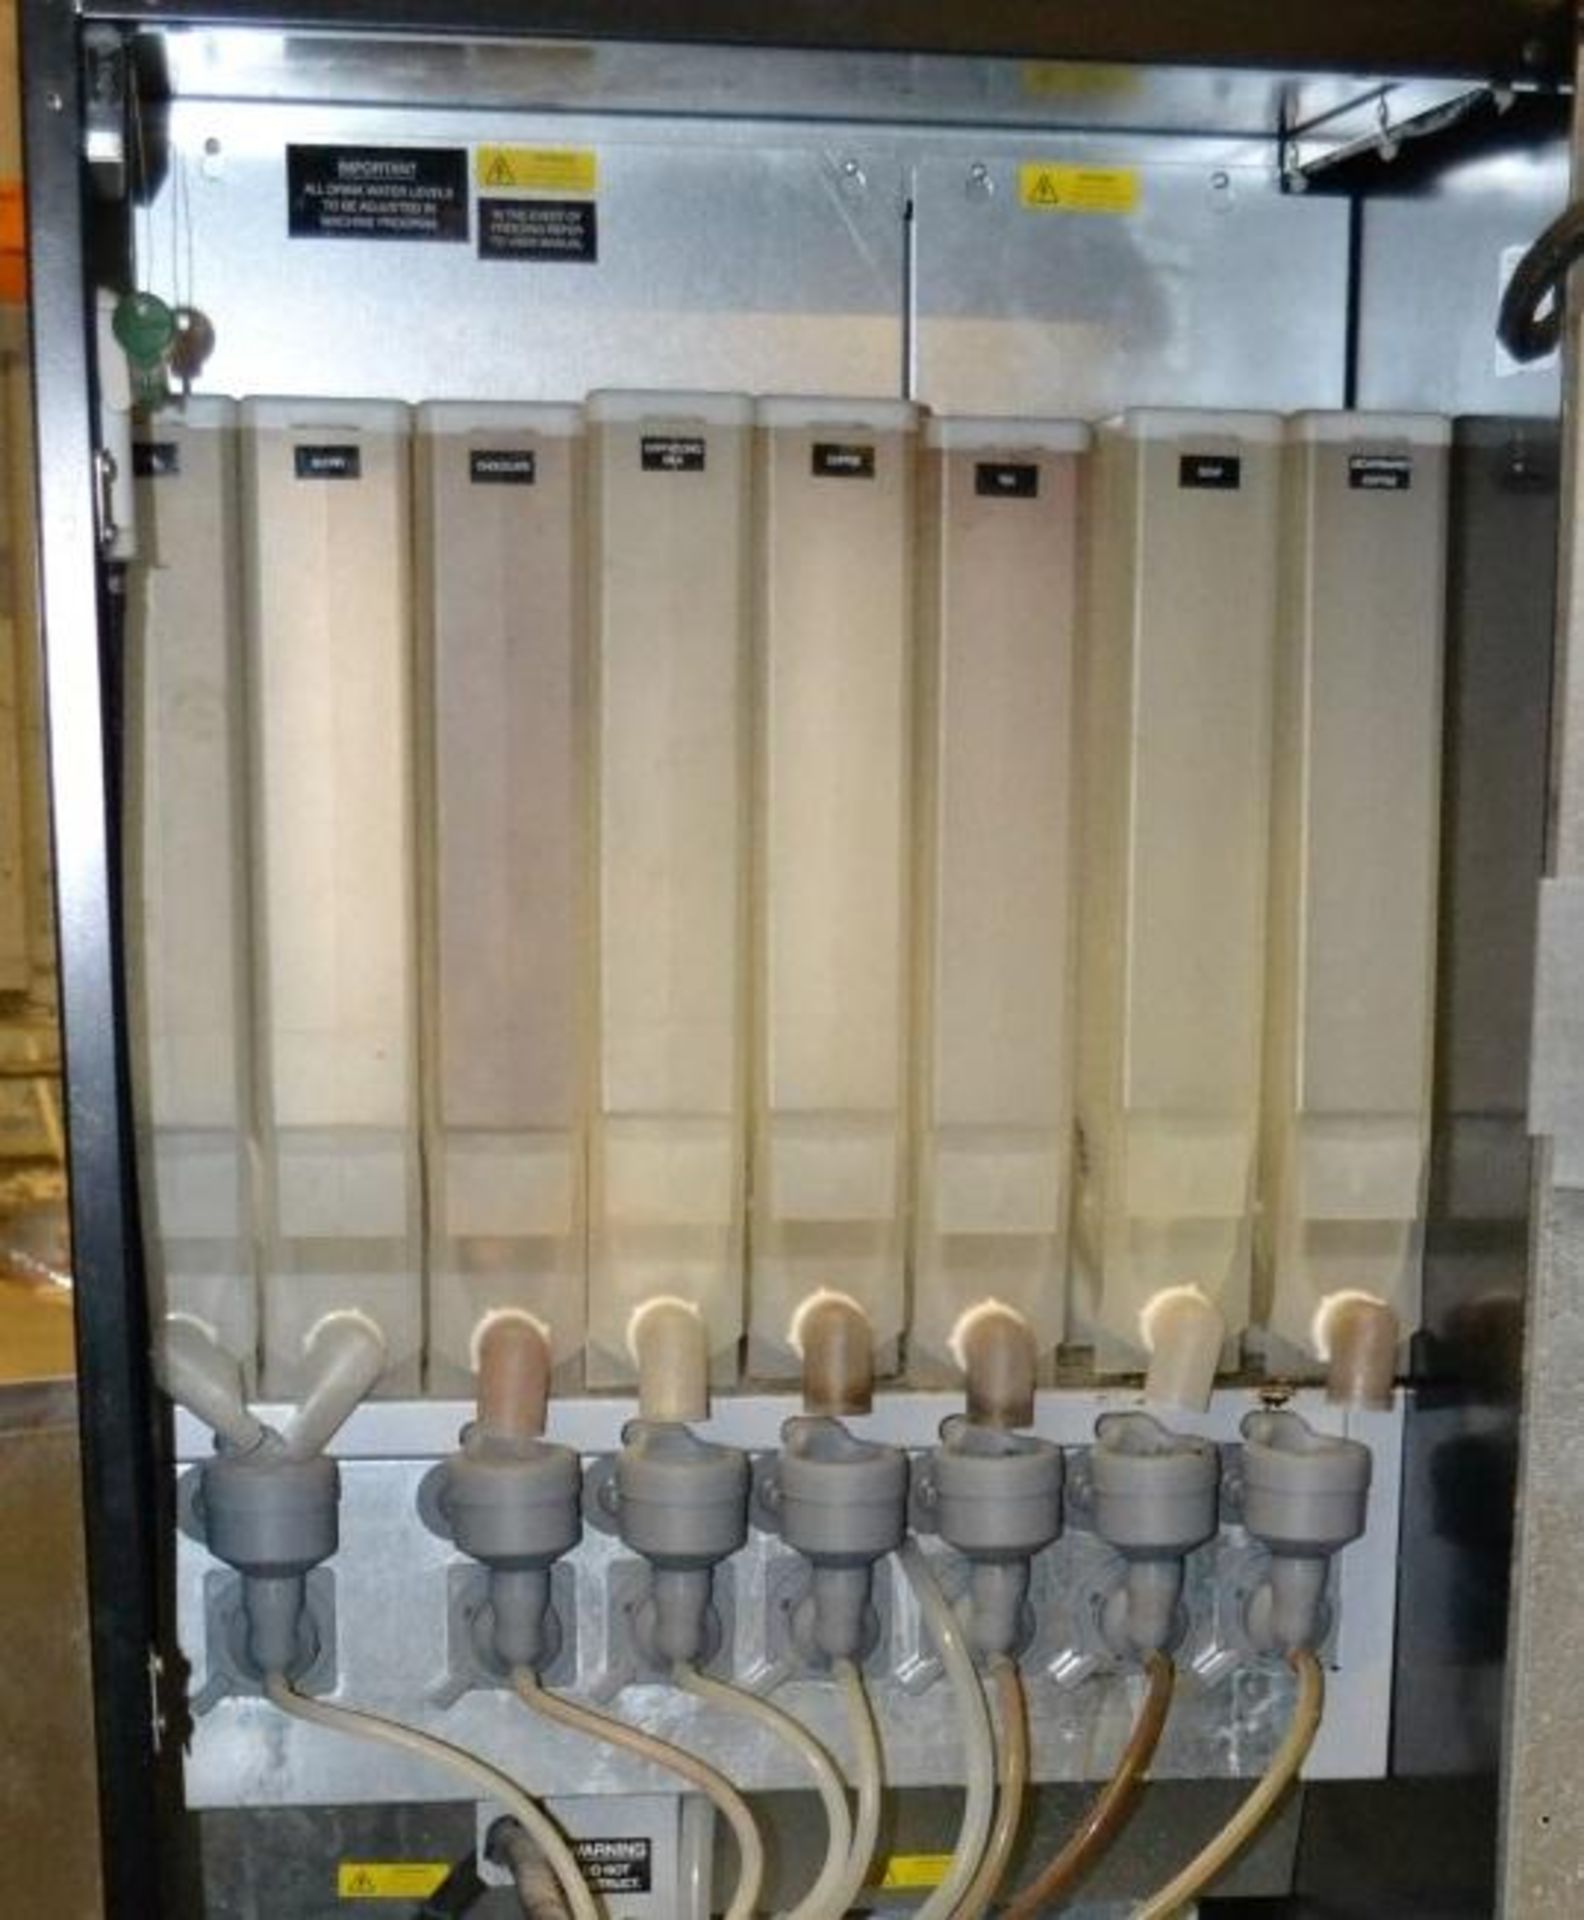 1 x Crane "Evolution" Hot Beverage Drinks Vending Machine With Keys - Year: 2011 - Recently Taken - Image 8 of 17